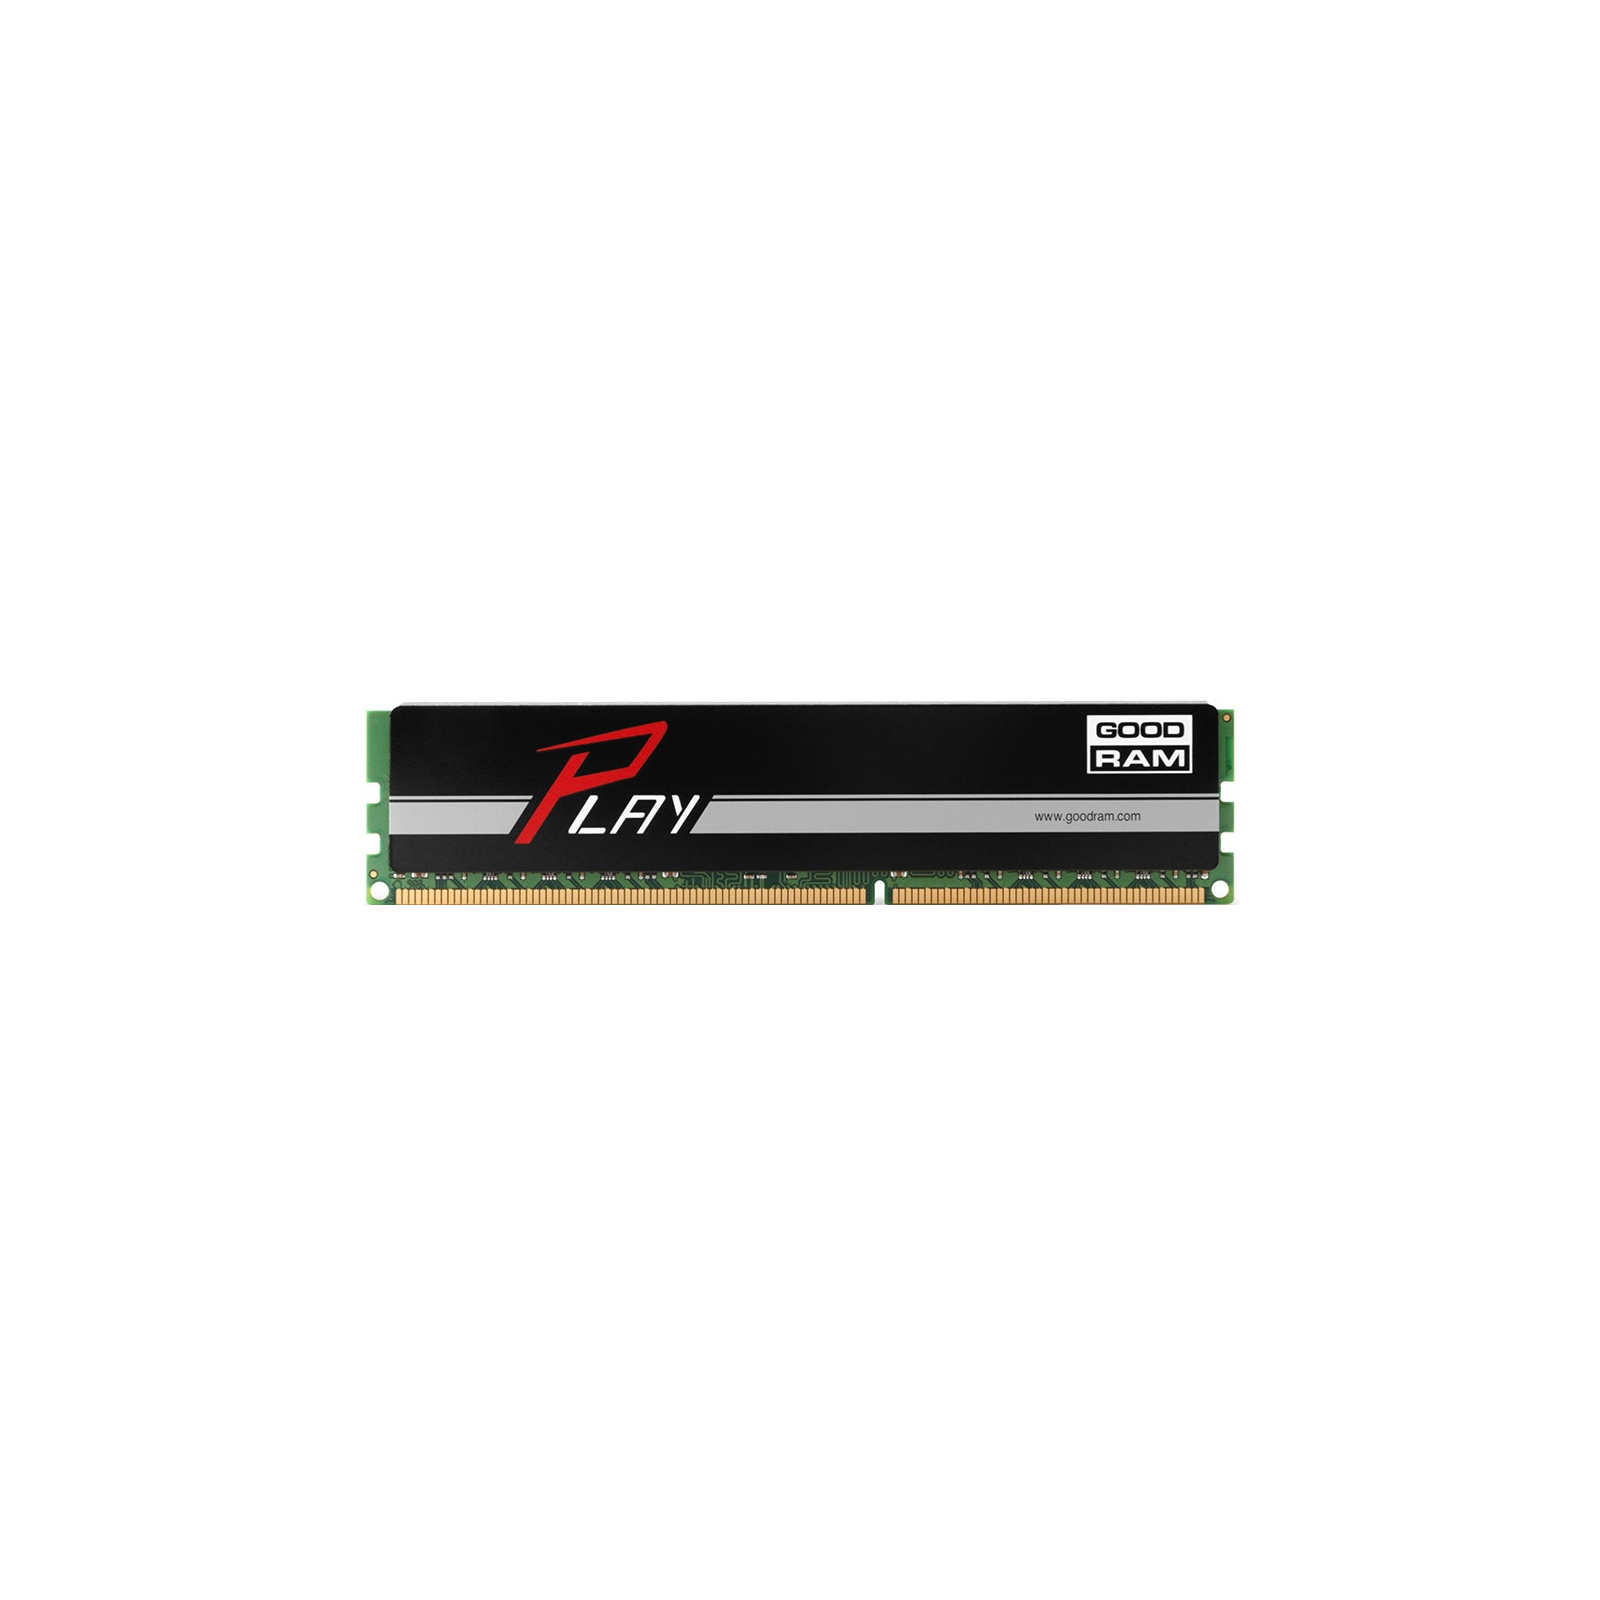 Модуль памяти для компьютера DDR4 8GB 2800 MHz PLAY Black Goodram (GY2800D464L16S/8G)